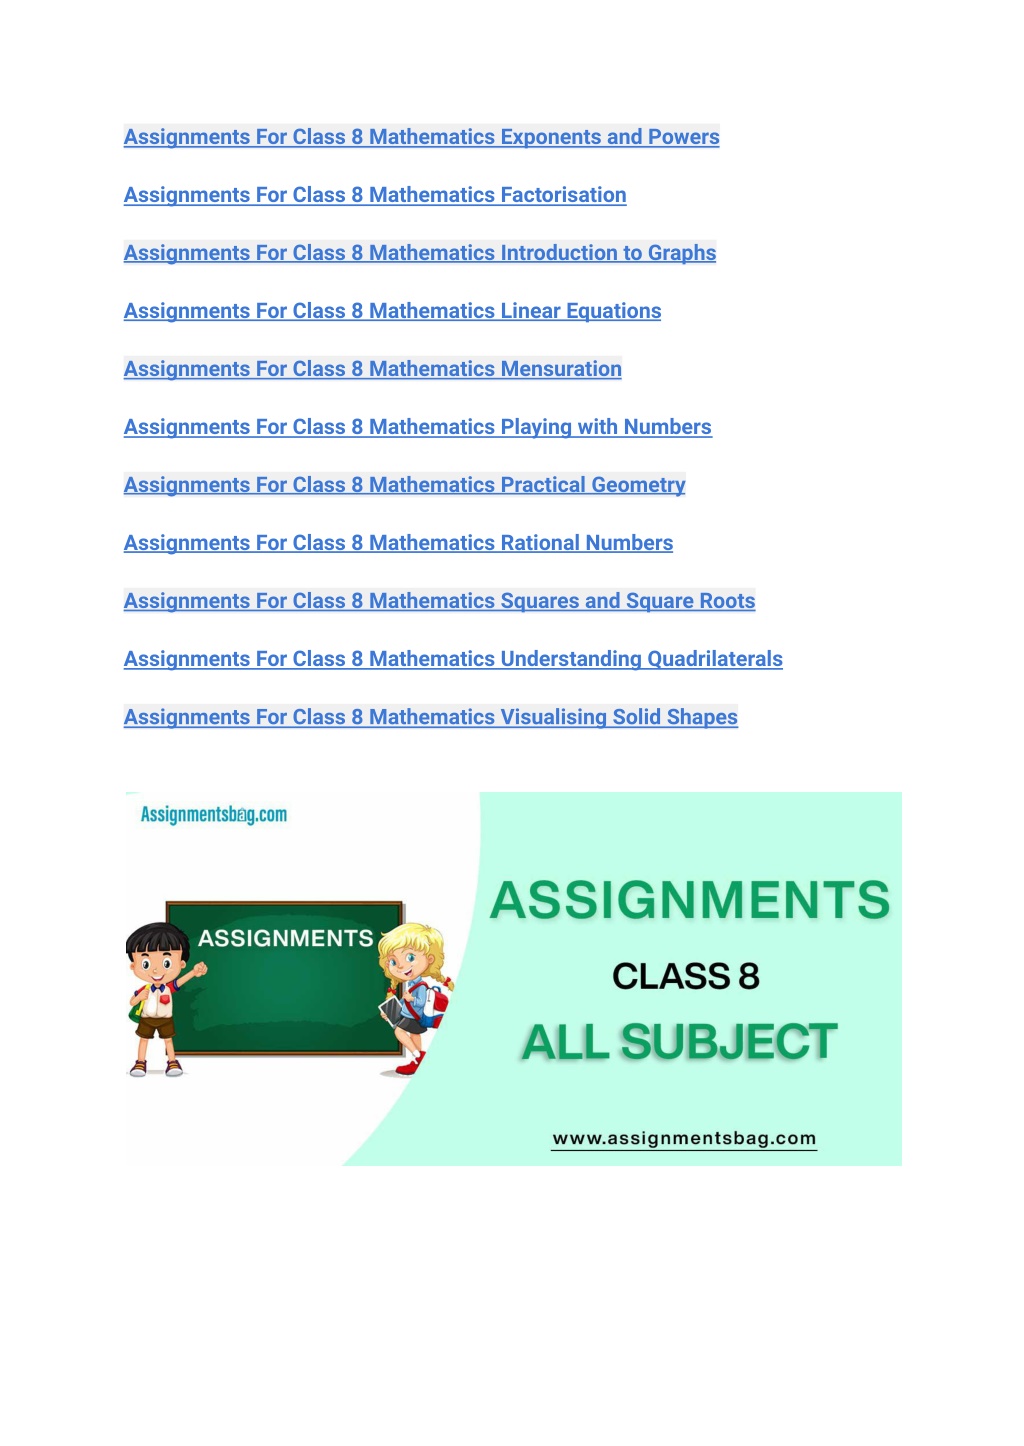 class 8 assignments